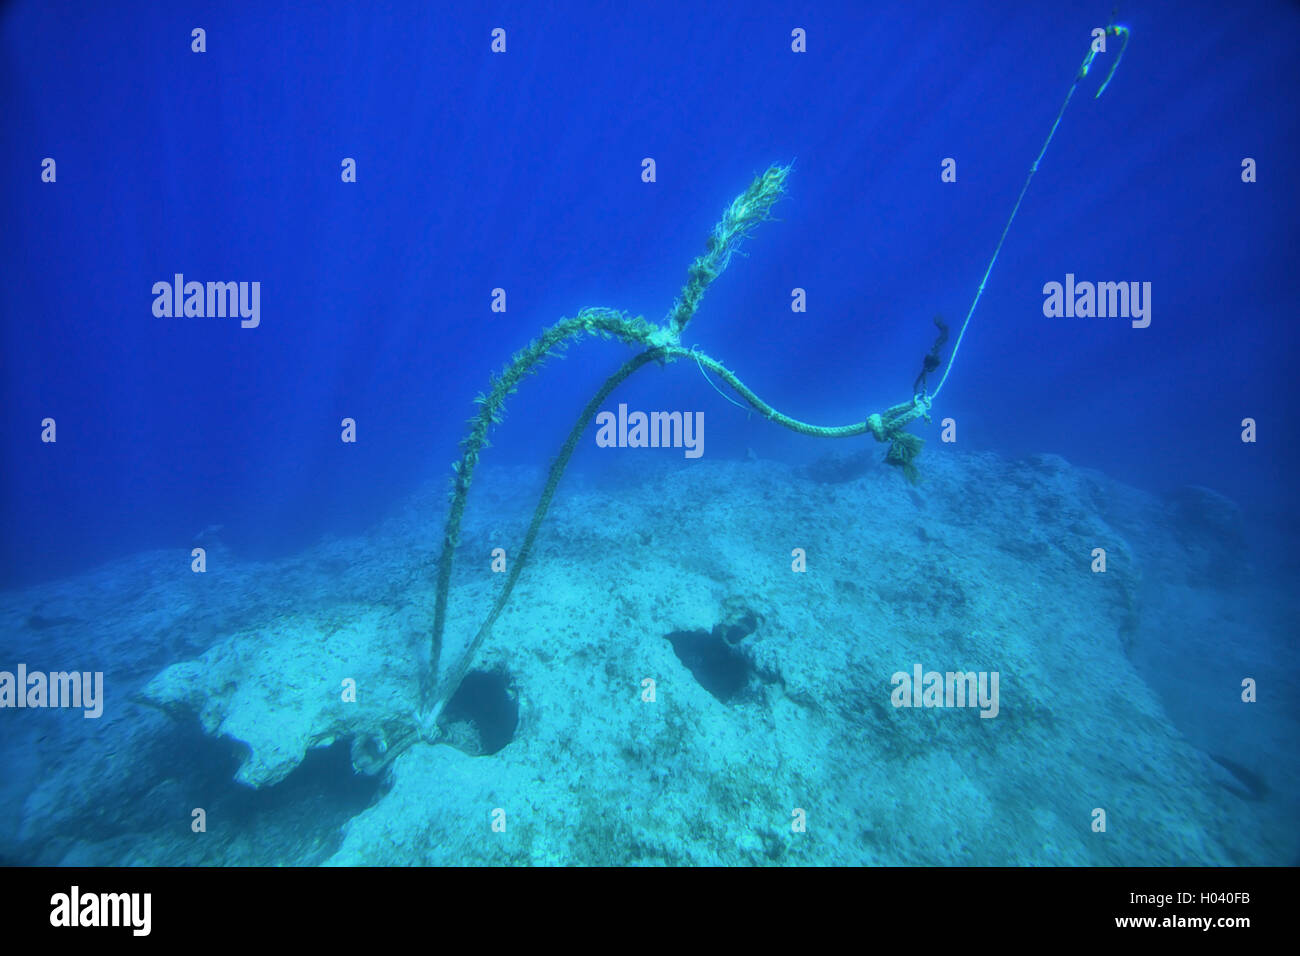 ropes floating underwater Stock Photo